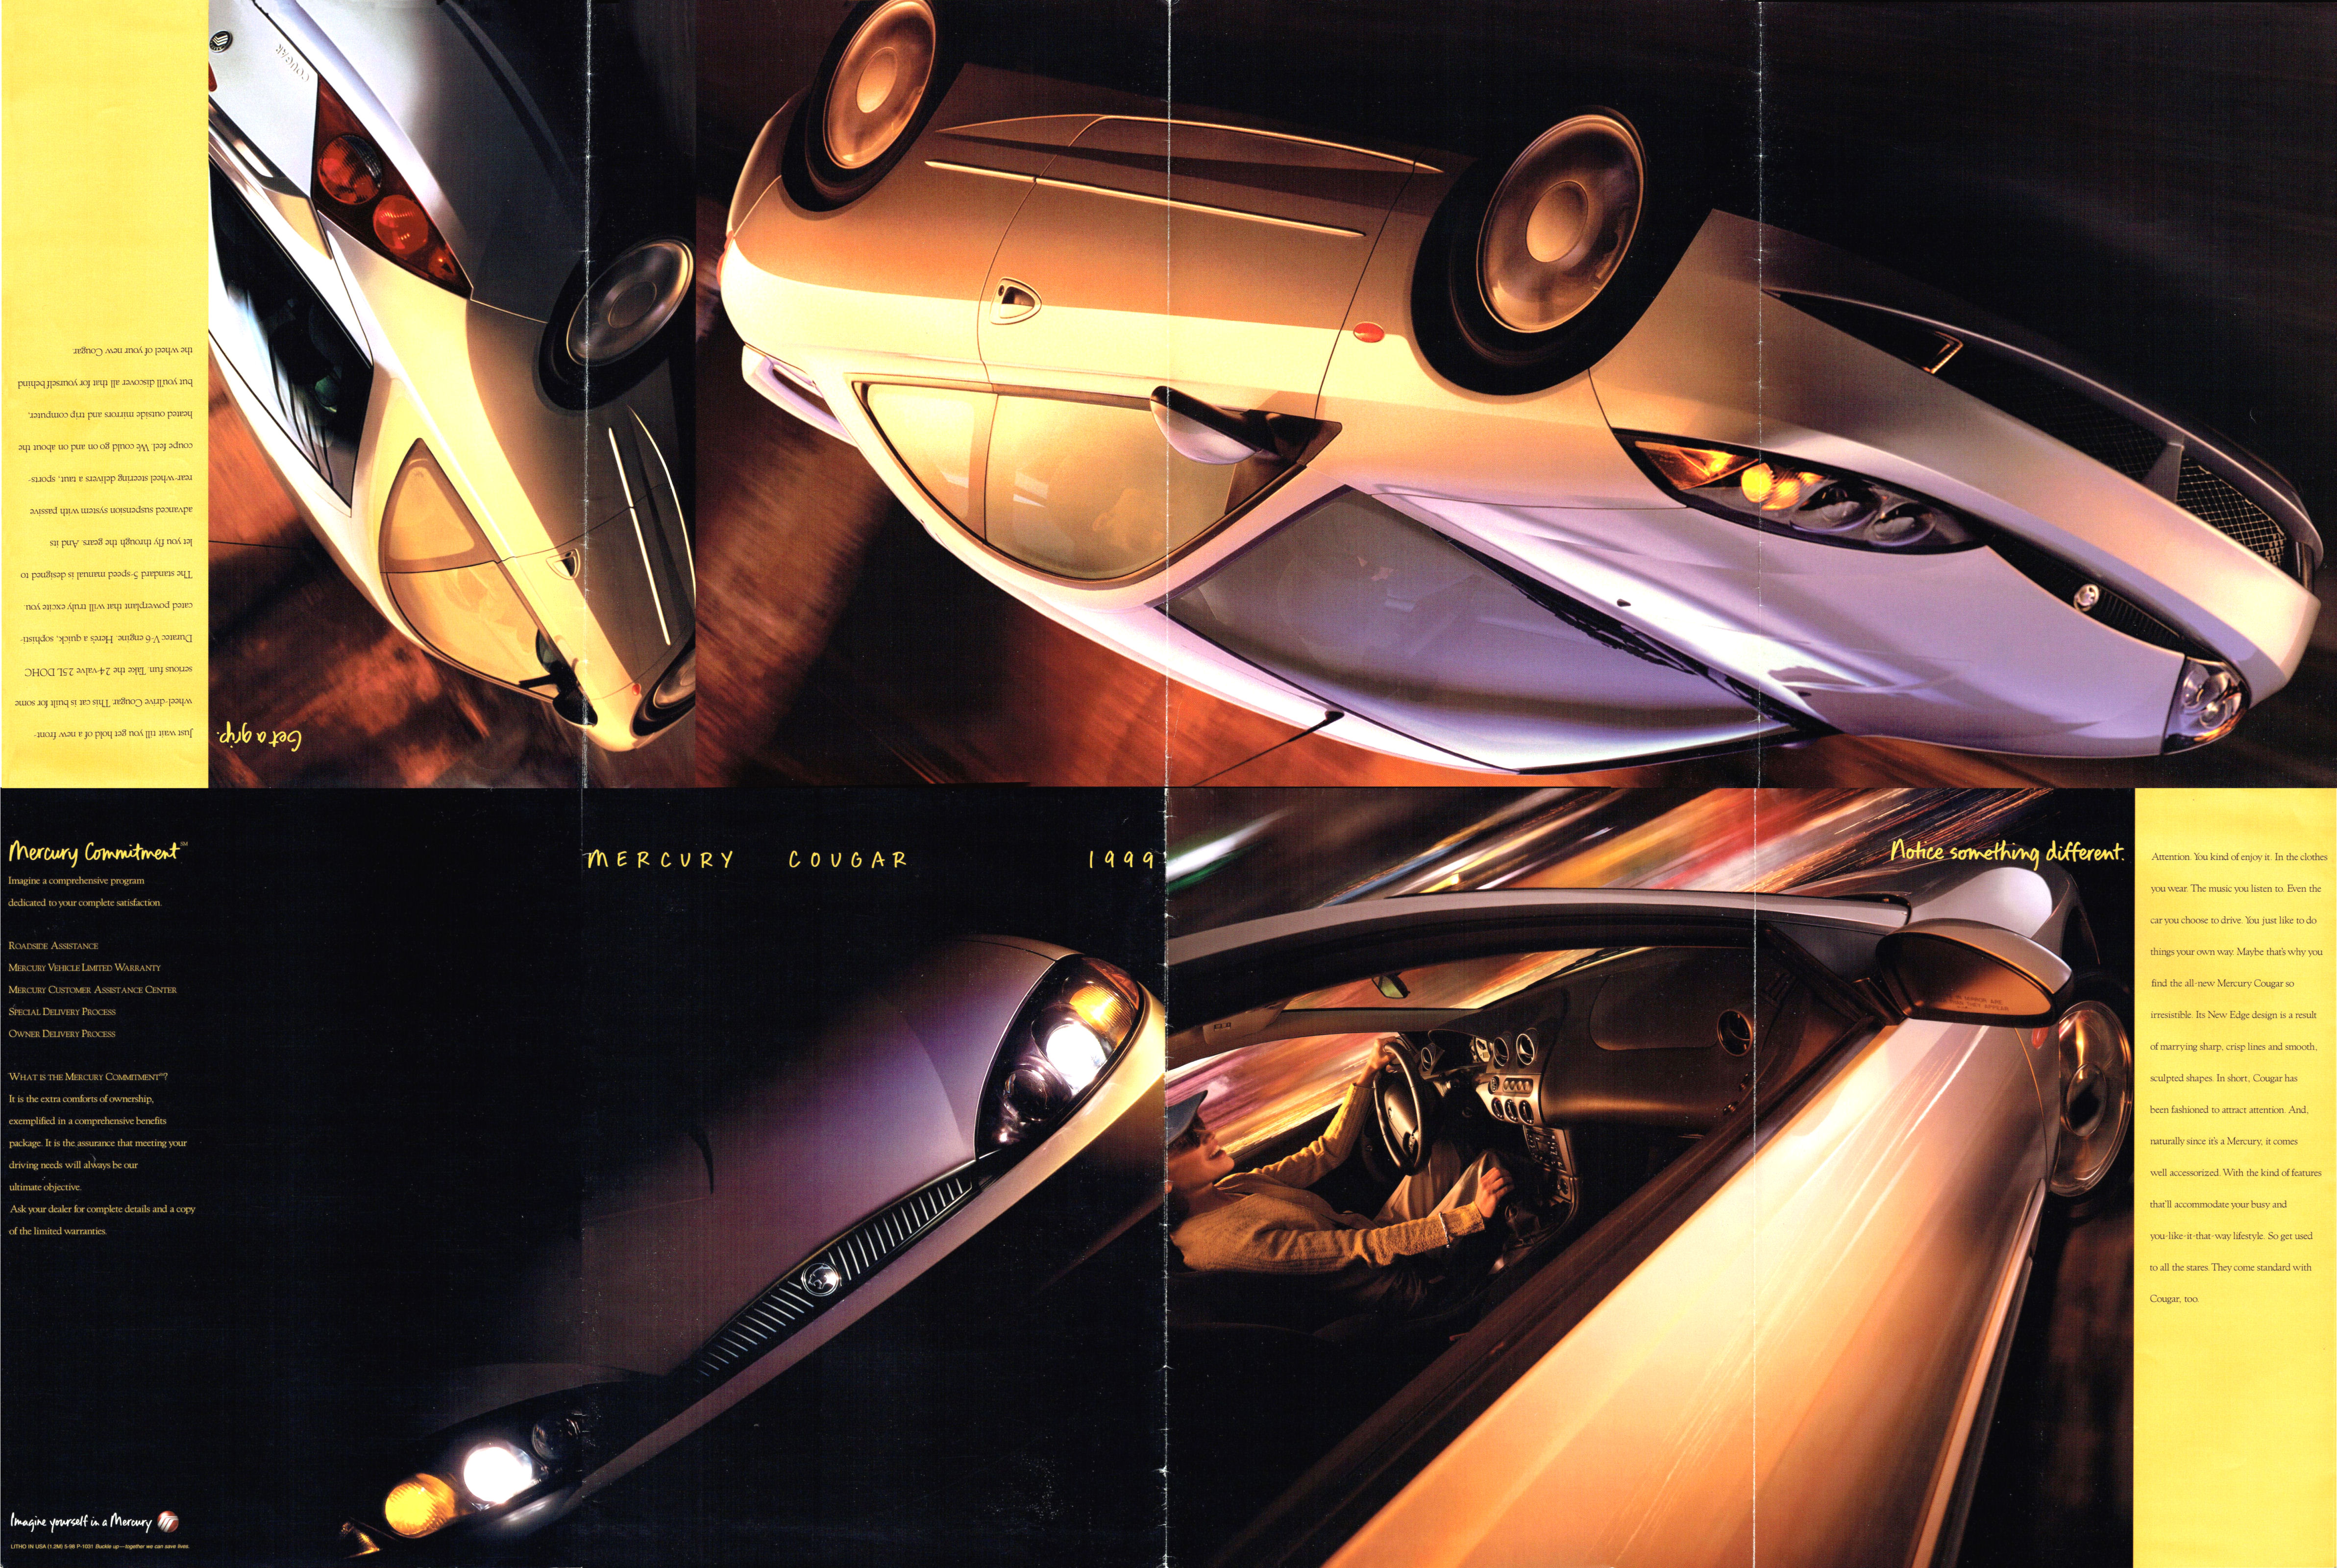 1999 Mercury Cougar Foldout-Side A